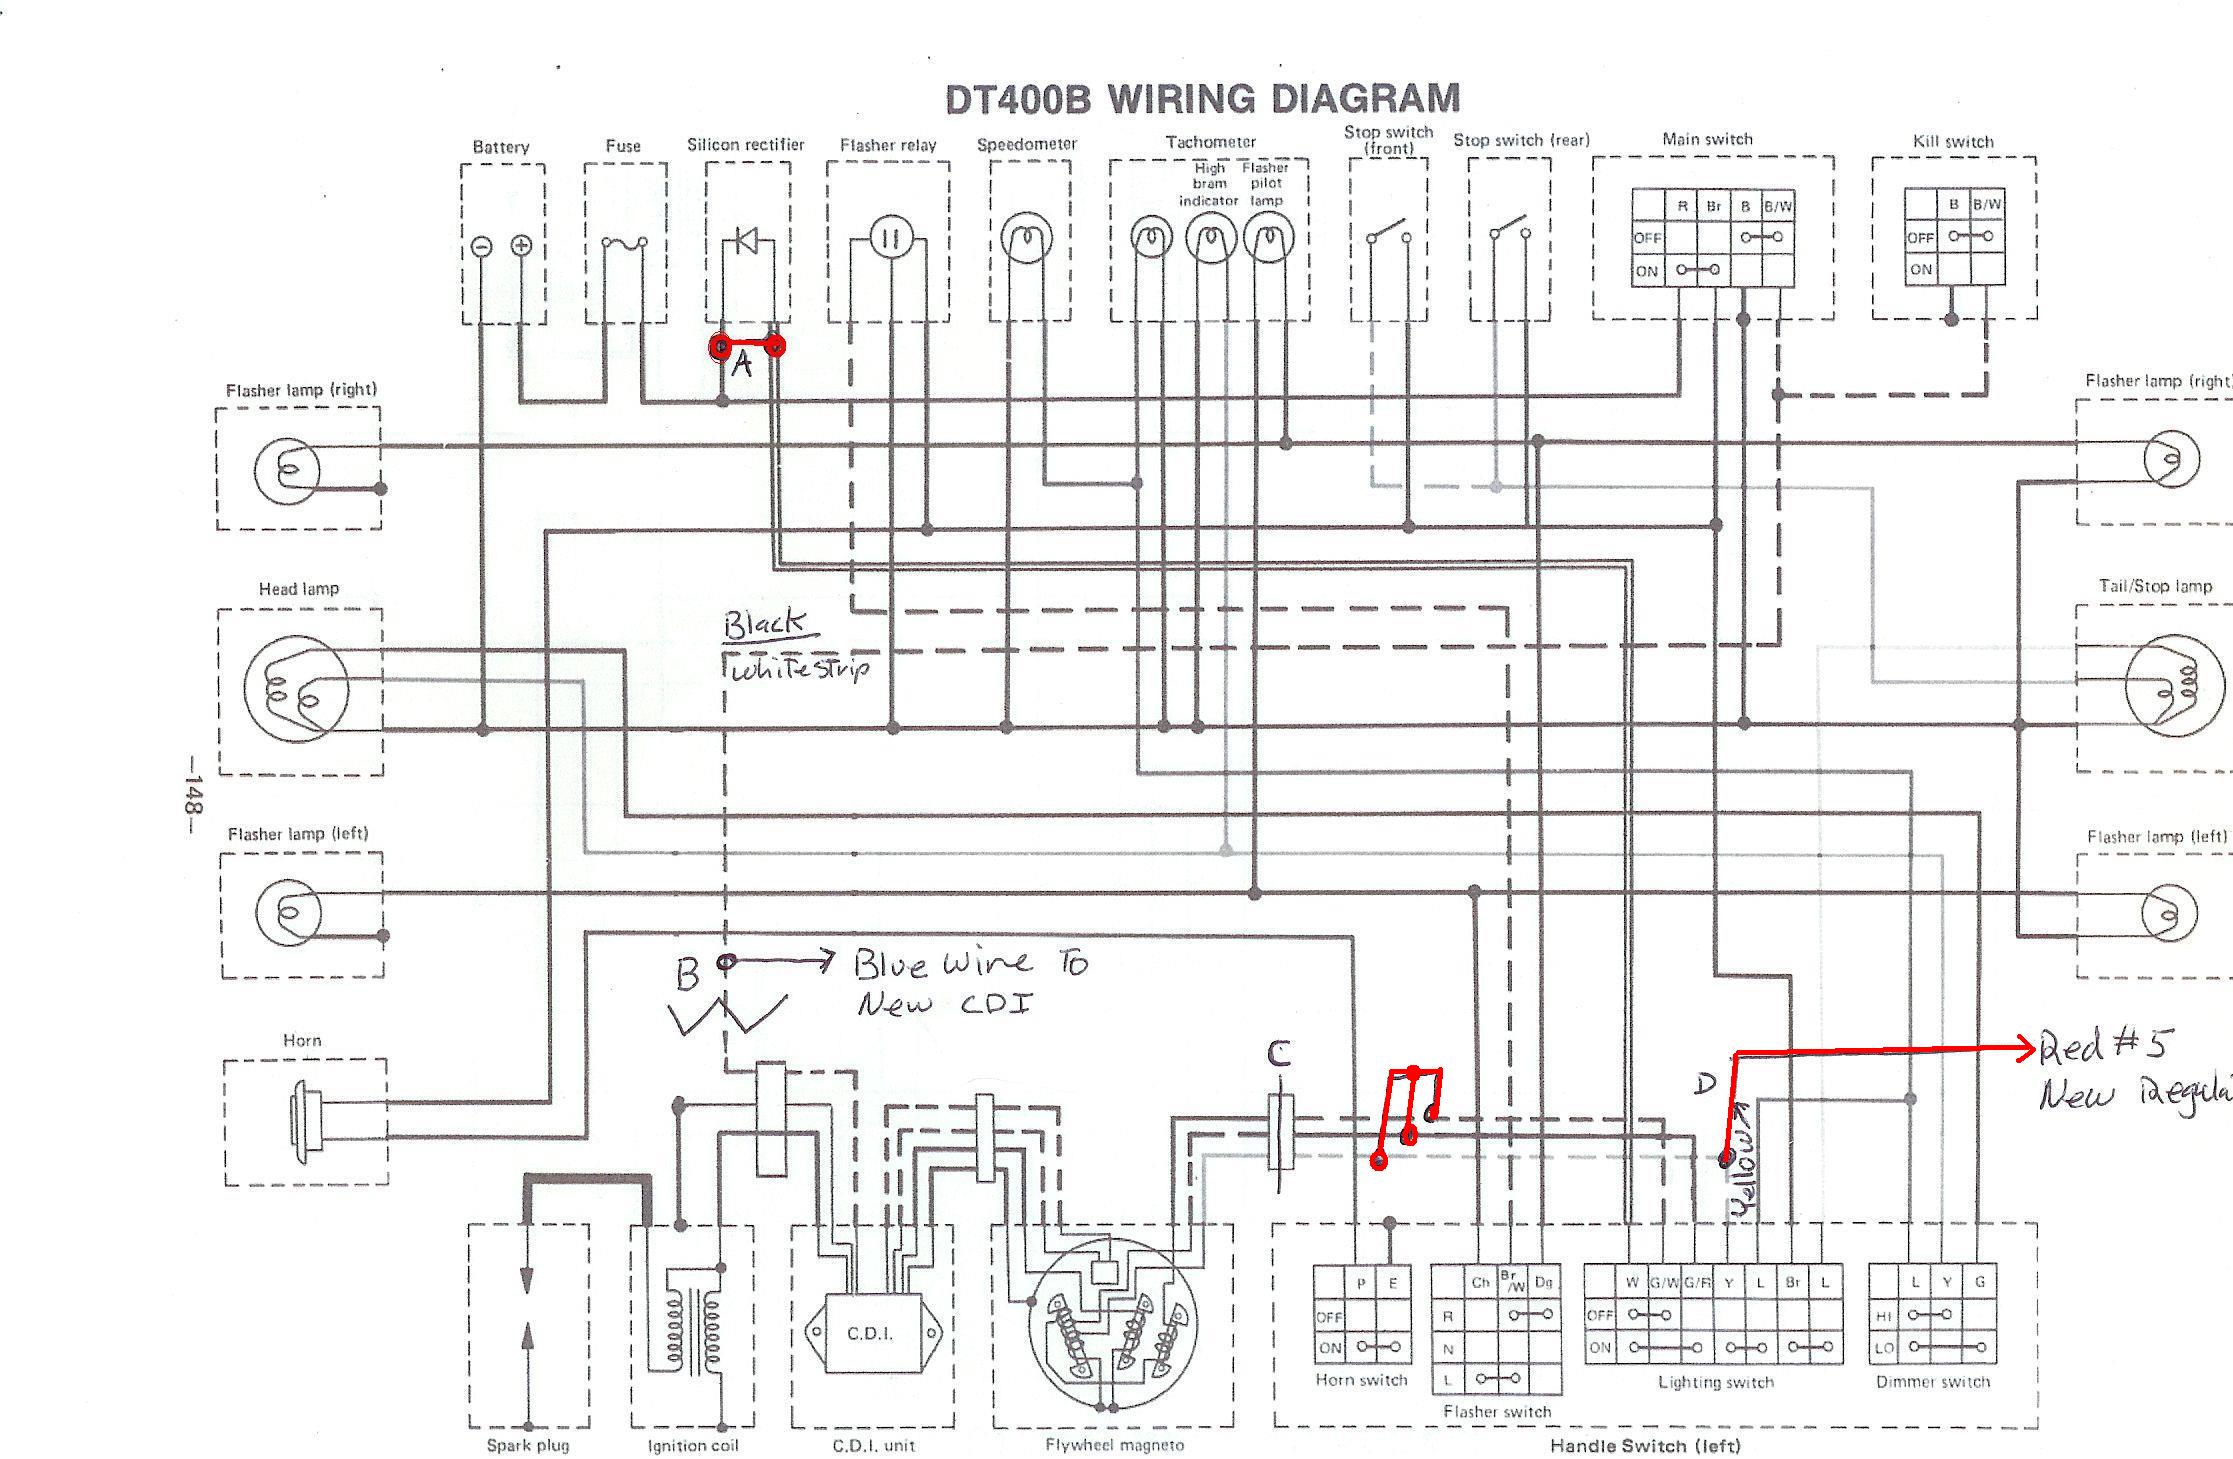 yamaha mx 830 wiring diagram